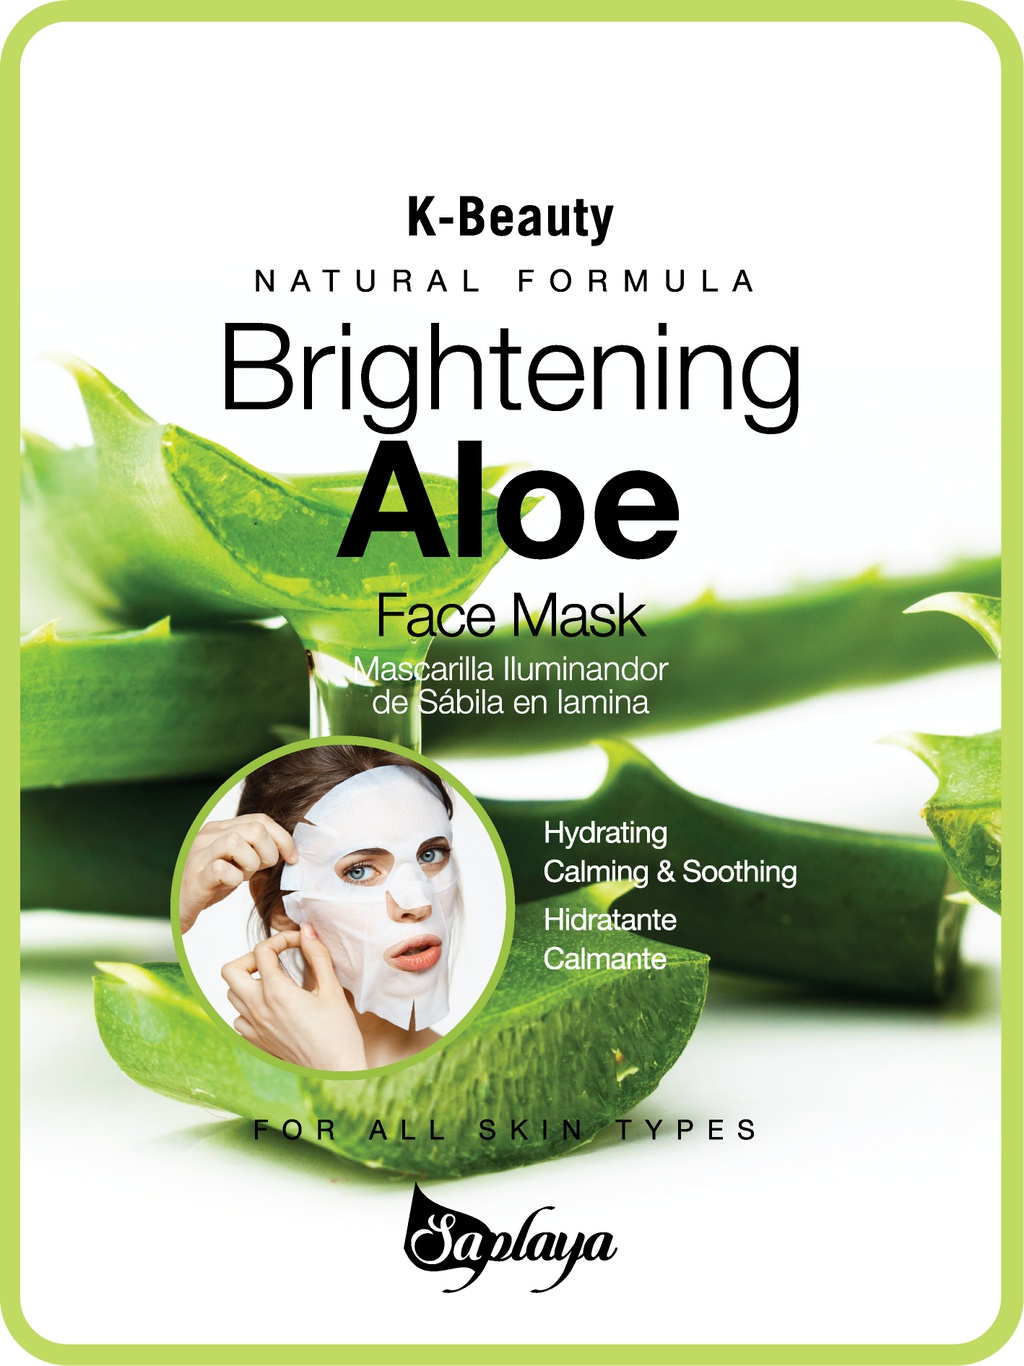 Saplaya Brightening Aloe Face Mask